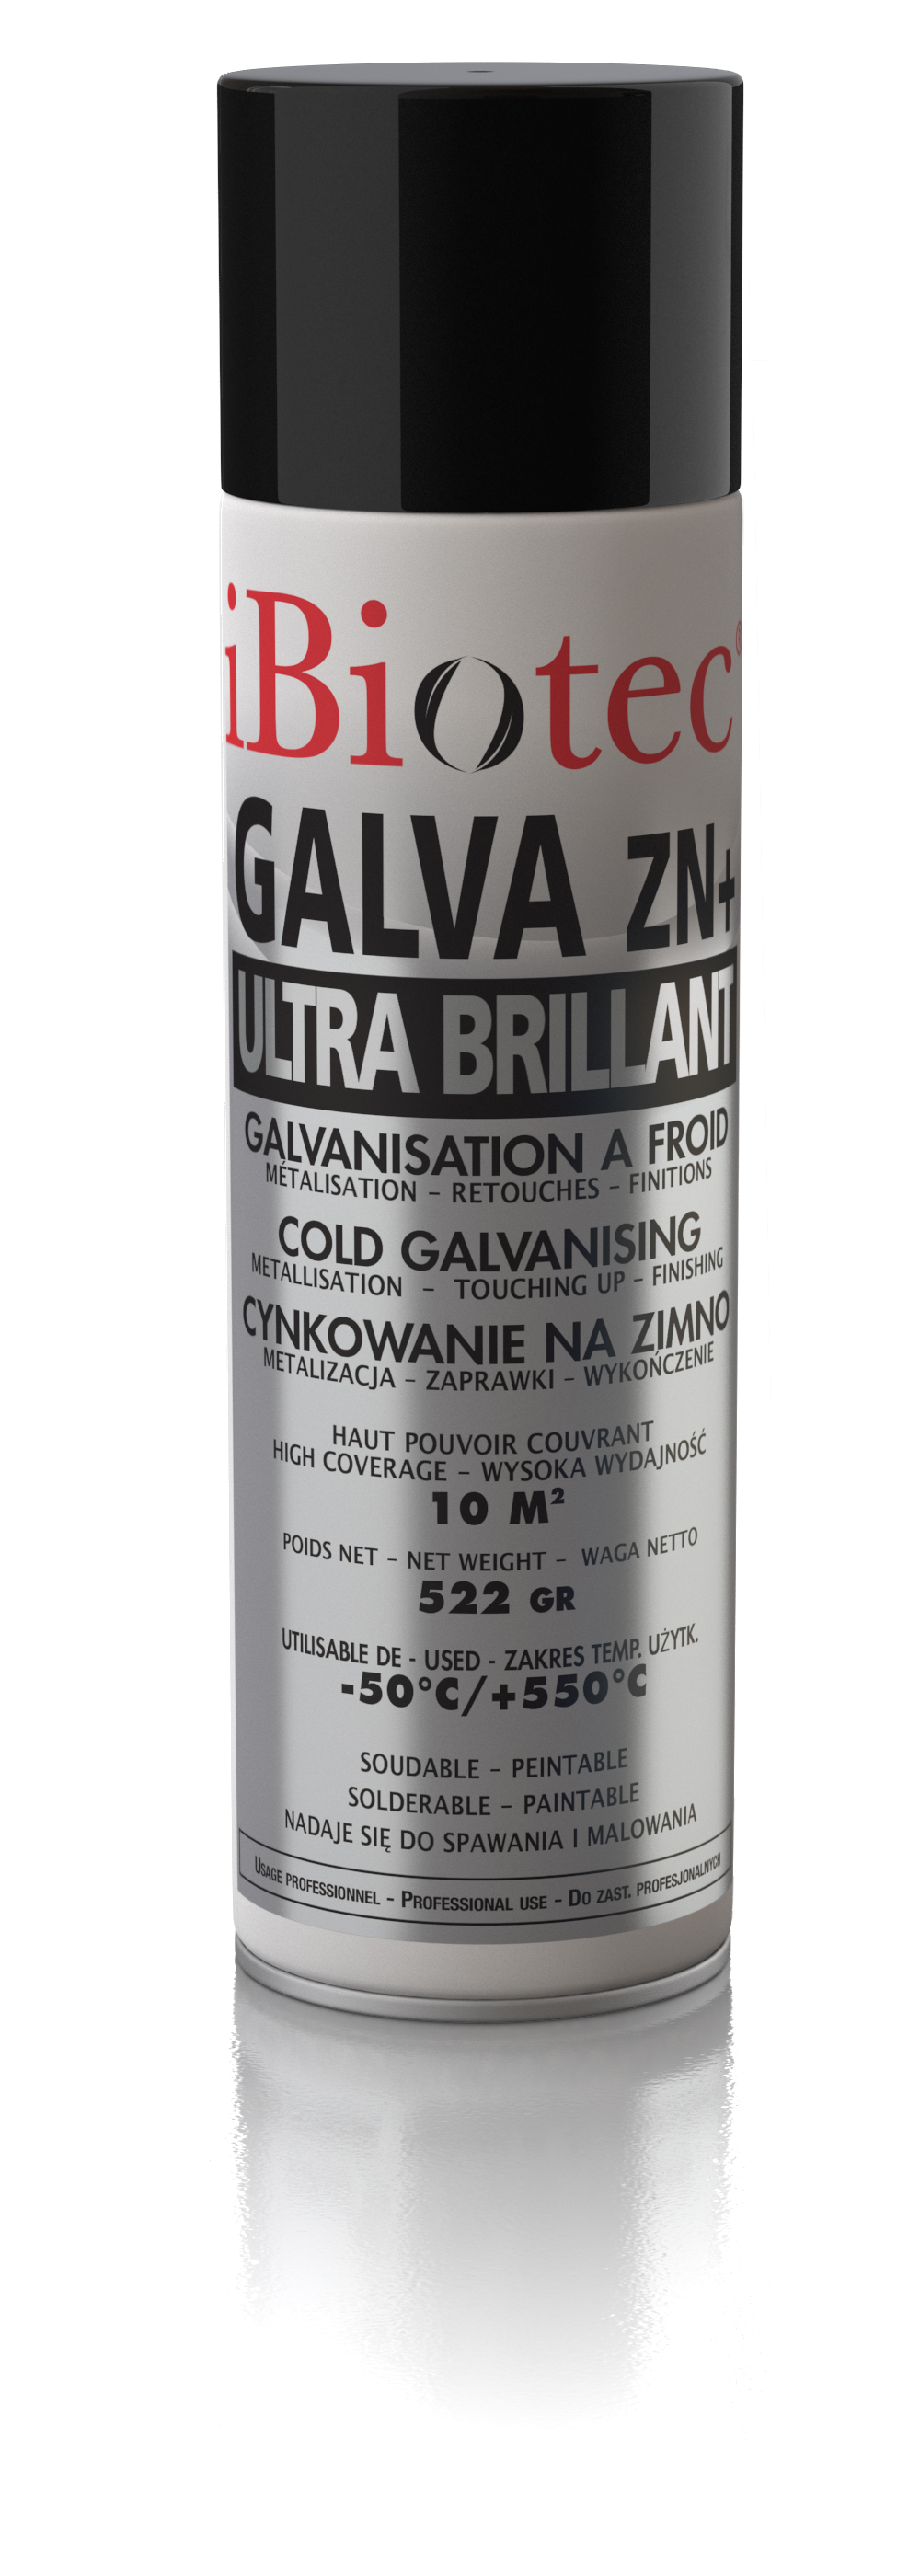 Cold galvanizing spray, cold galvanizing paint, zinc cold galvanizing, zinc spray, zinc metal spray, ultra gloss finish zinc spray, iBiotec cold galvanizing spray